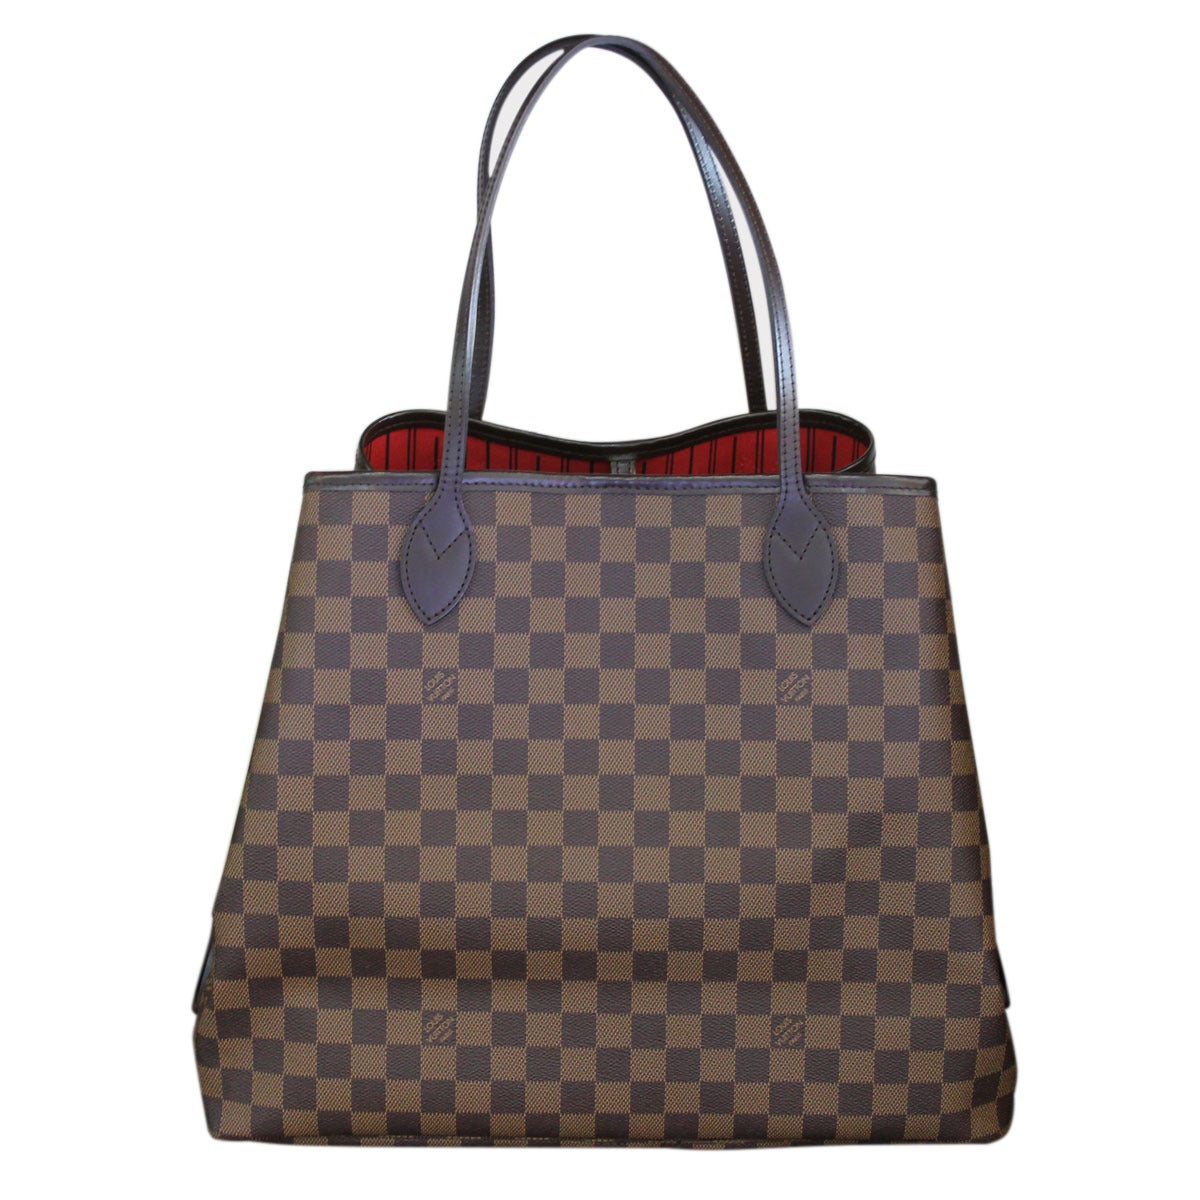 Louis Vuitton Neverfull GM Damier Ebene Tote Handbag in Box image 2